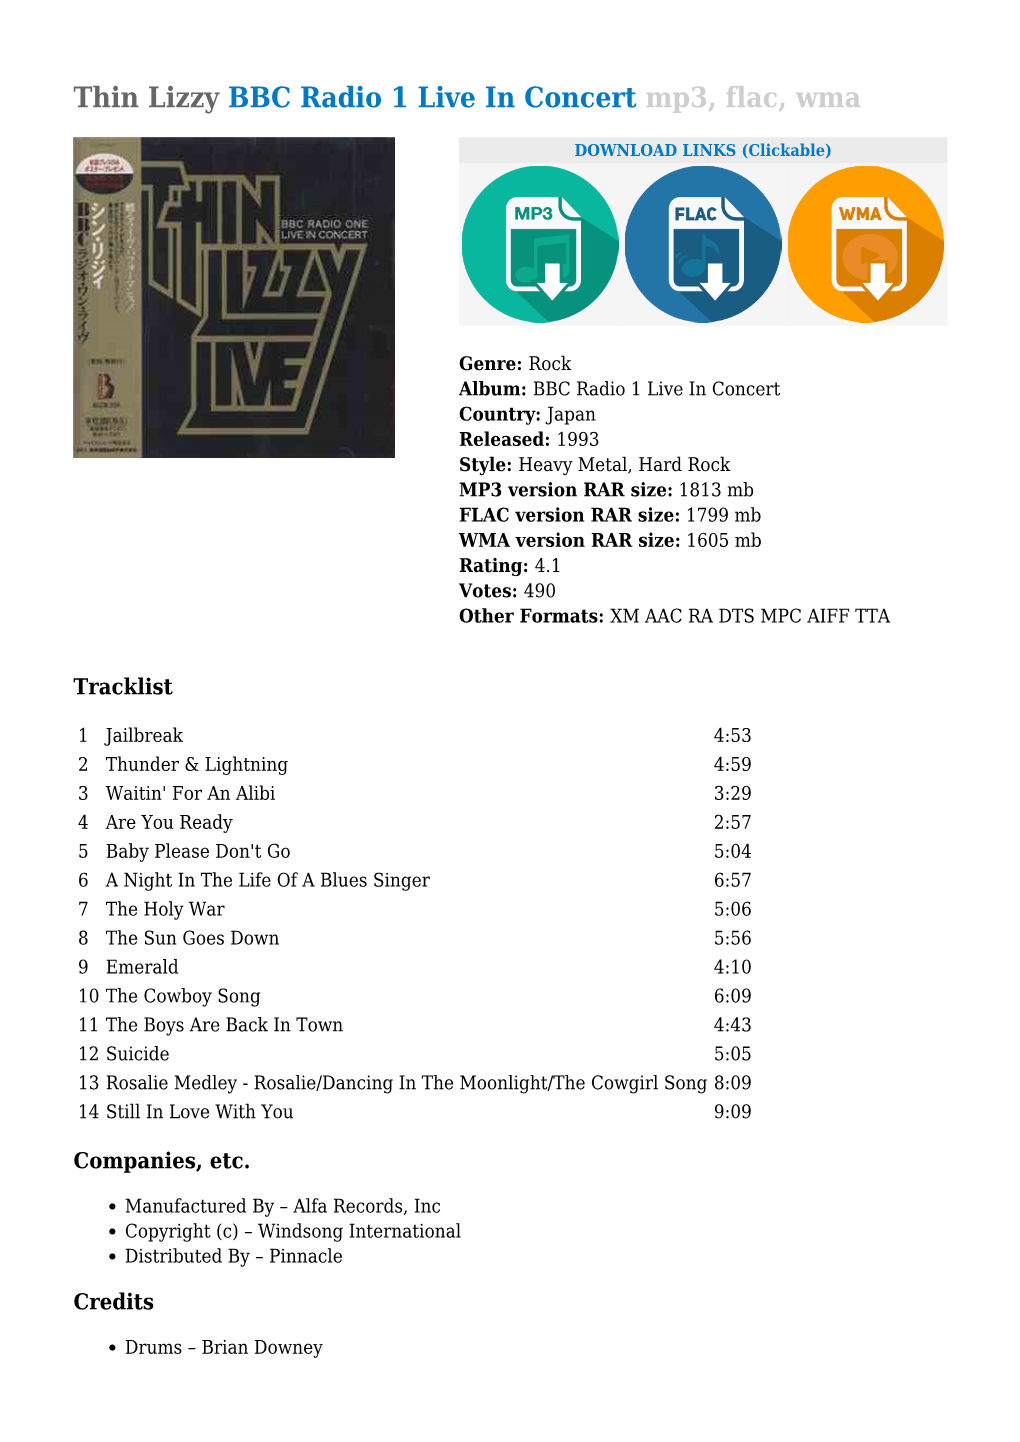 Thin Lizzy BBC Radio 1 Live in Concert Mp3, Flac, Wma